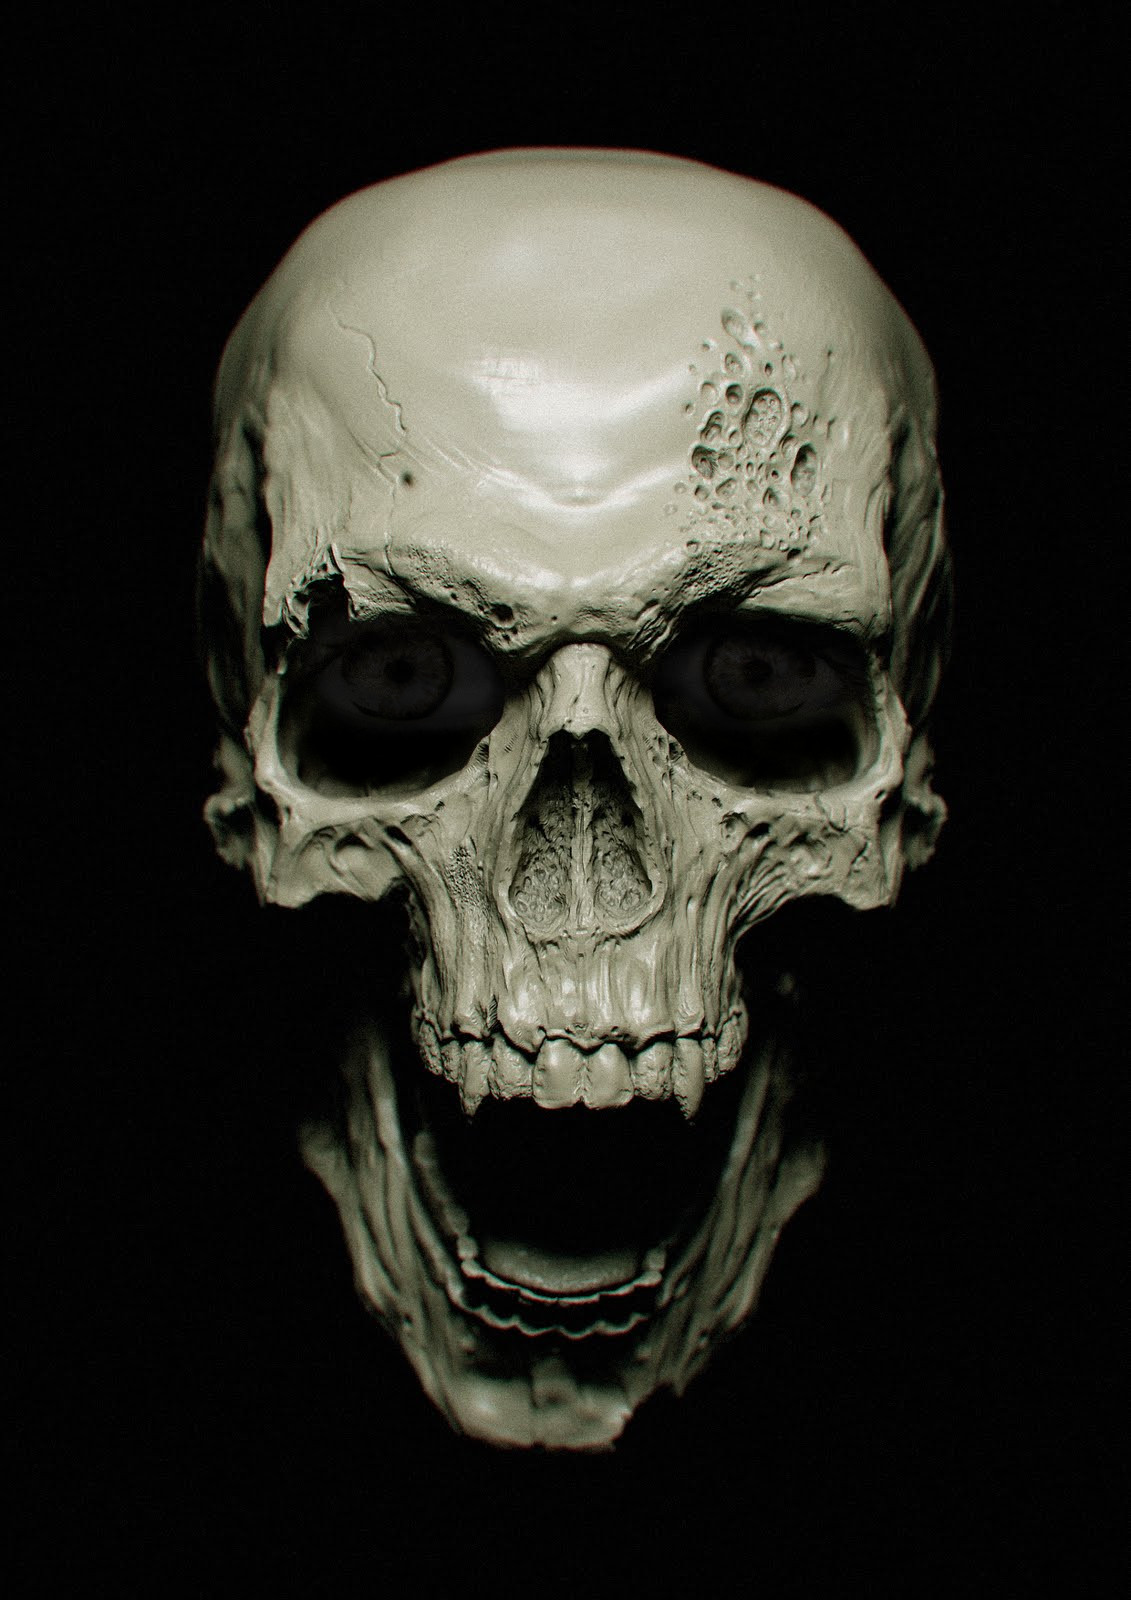 Skull with eyes